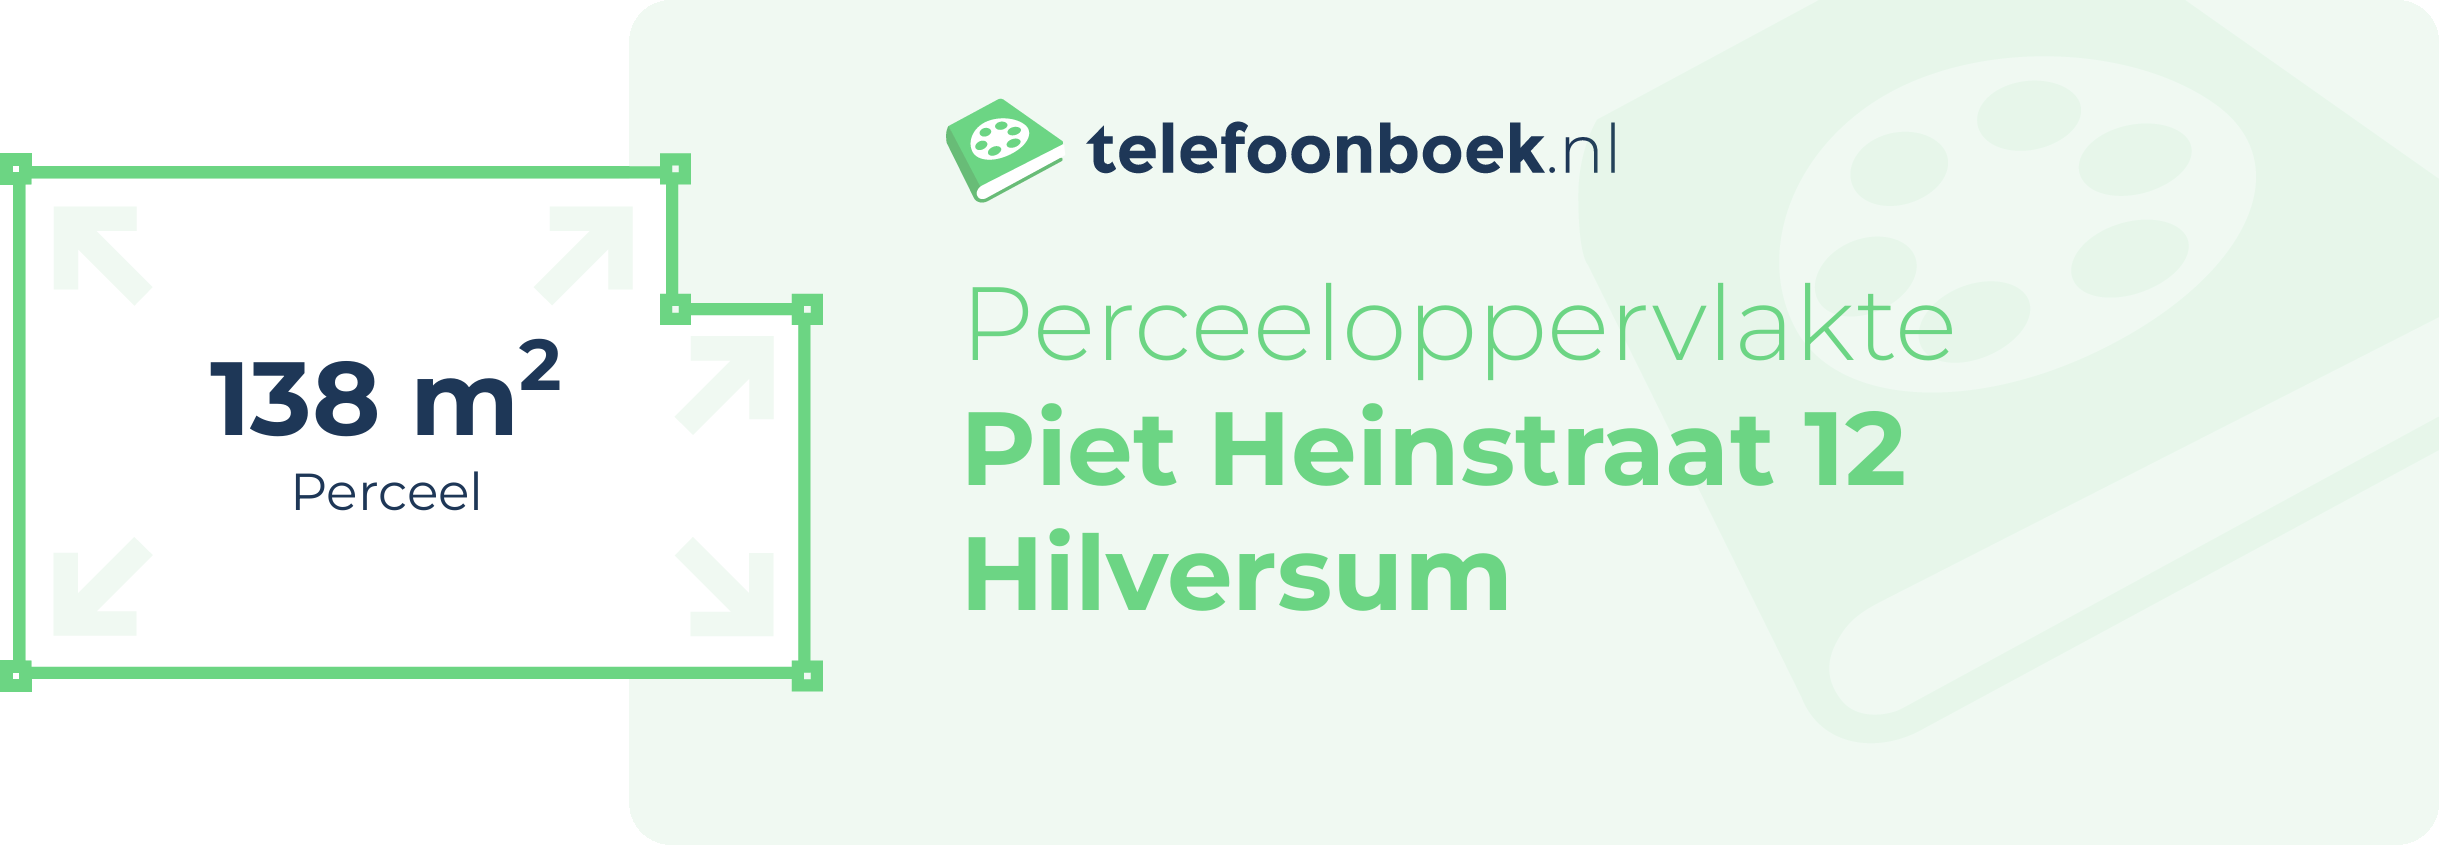 Perceeloppervlakte Piet Heinstraat 12 Hilversum